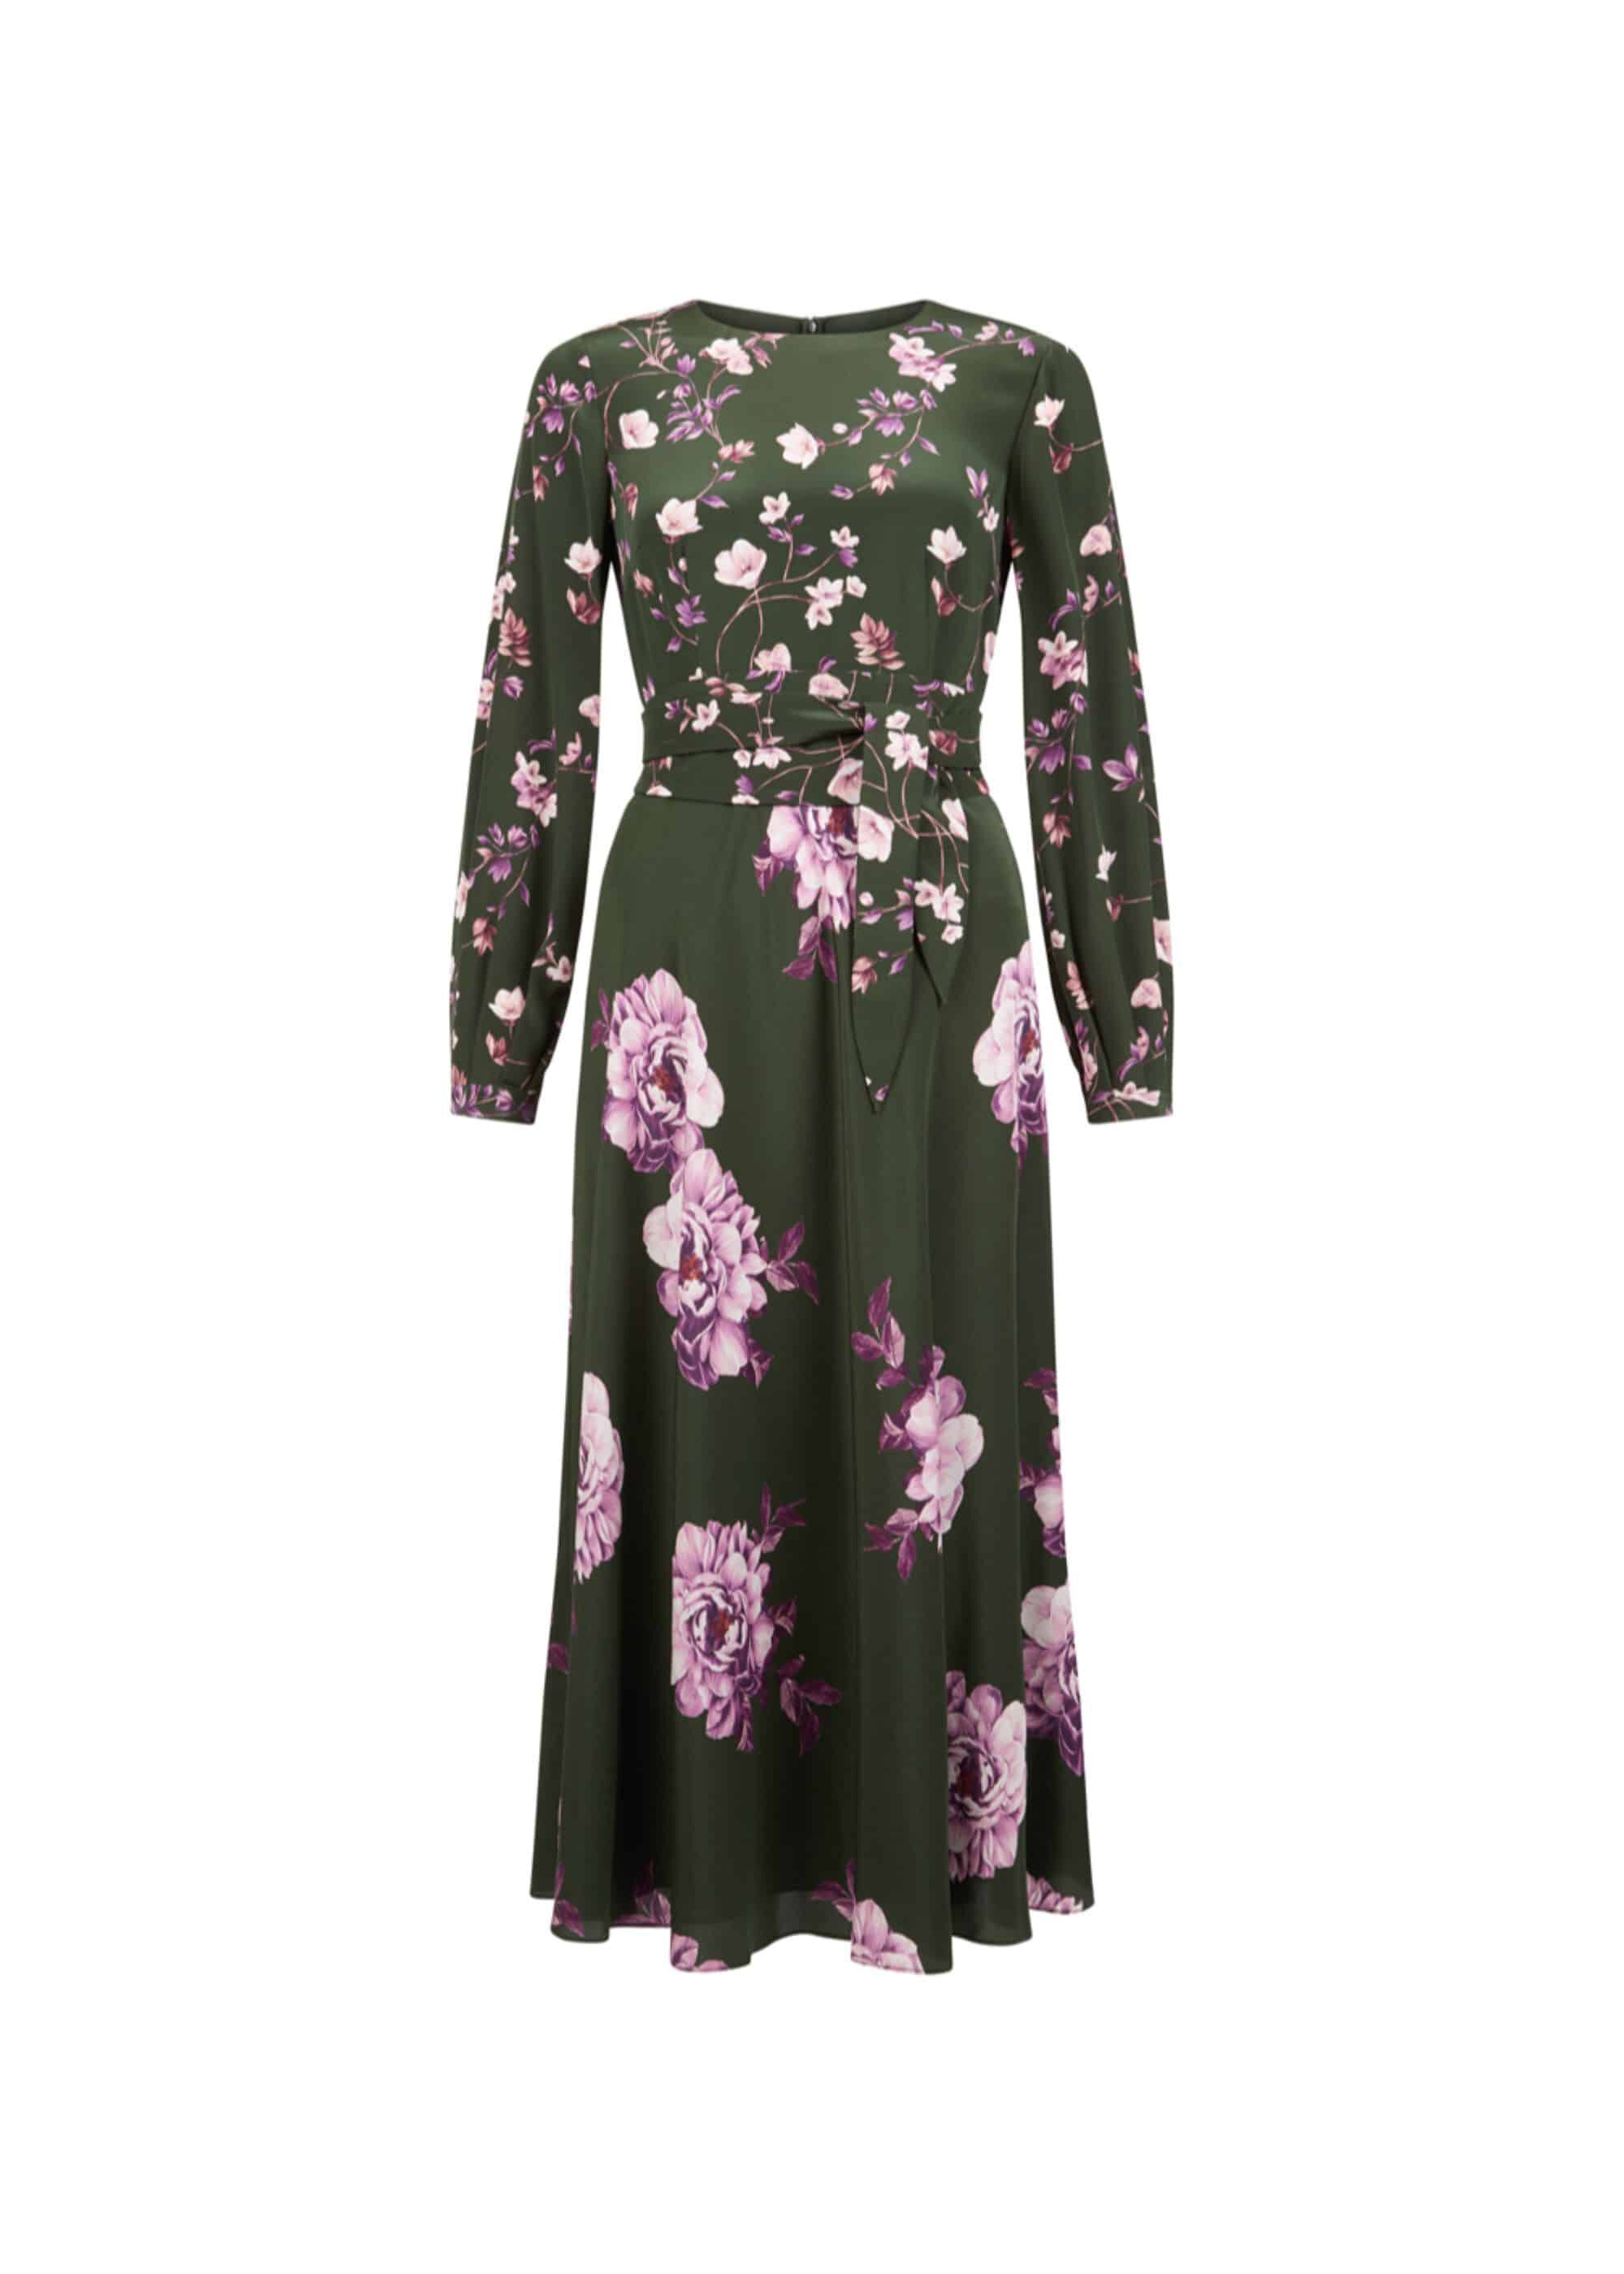 Hobbs Floral Silk Winter Rose Dress Midi Fit & Flare Dress Long Sleeve ...